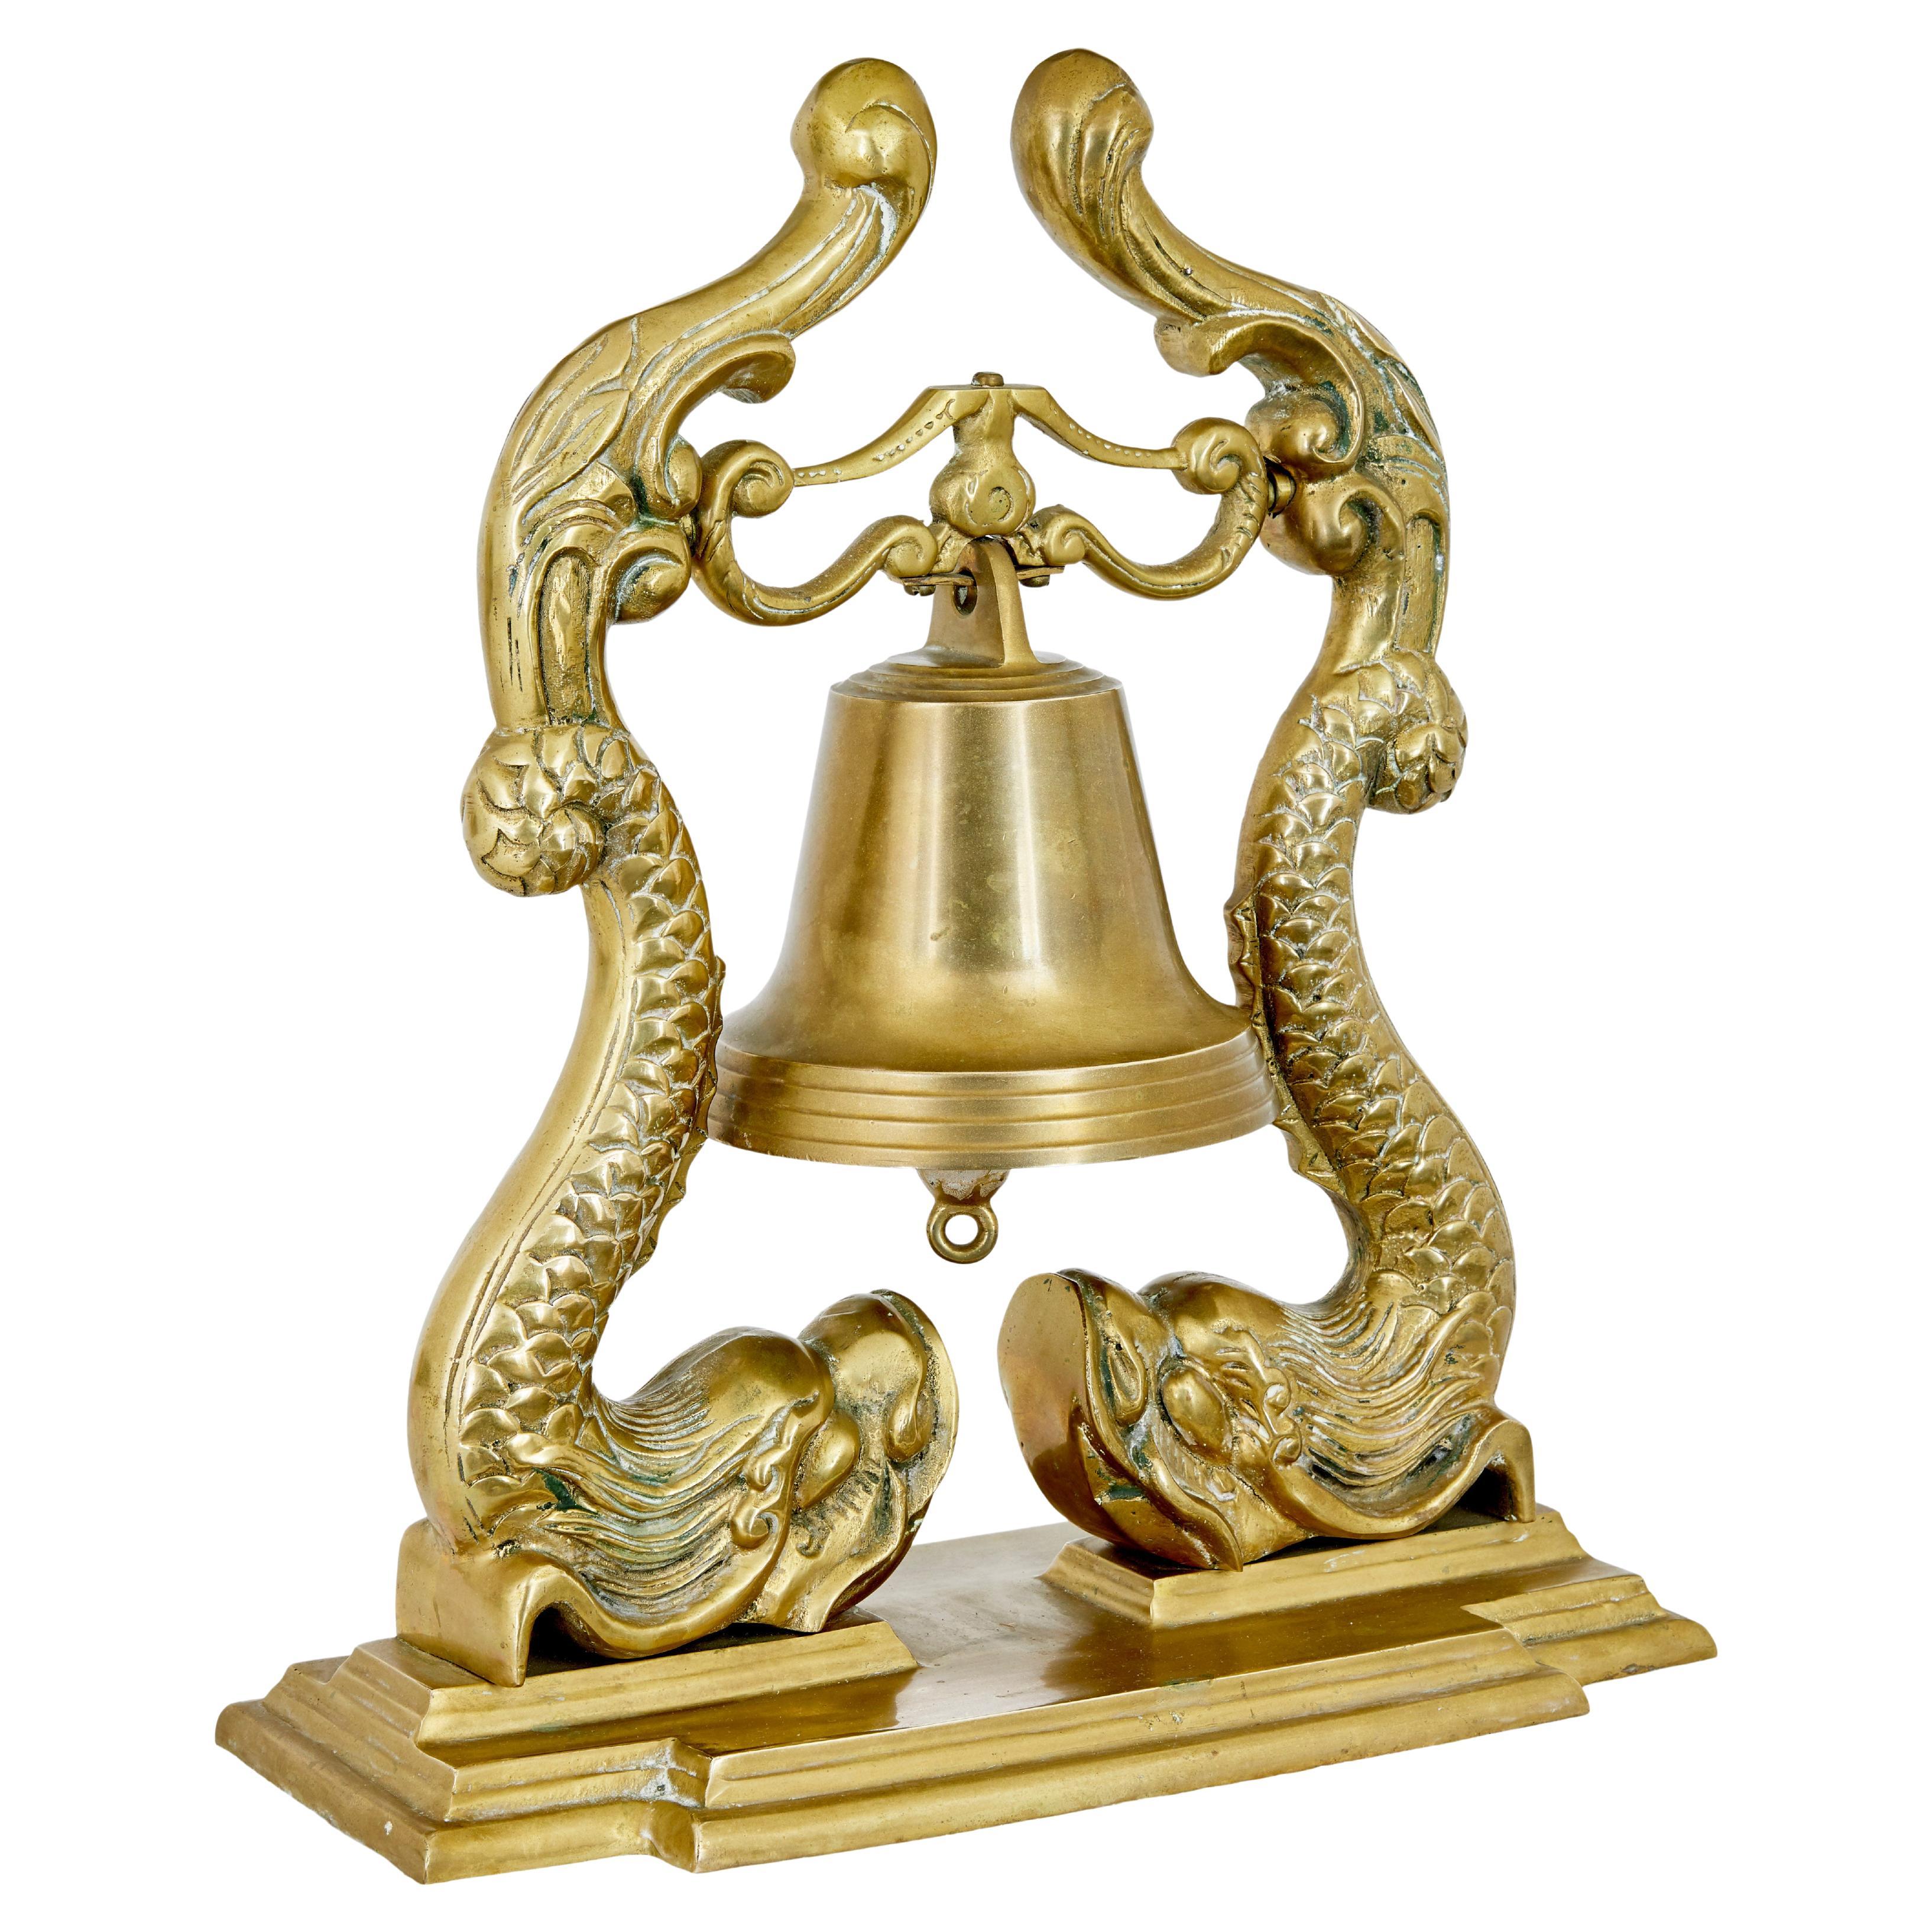 19th century Victorian brass decorative dinner bell